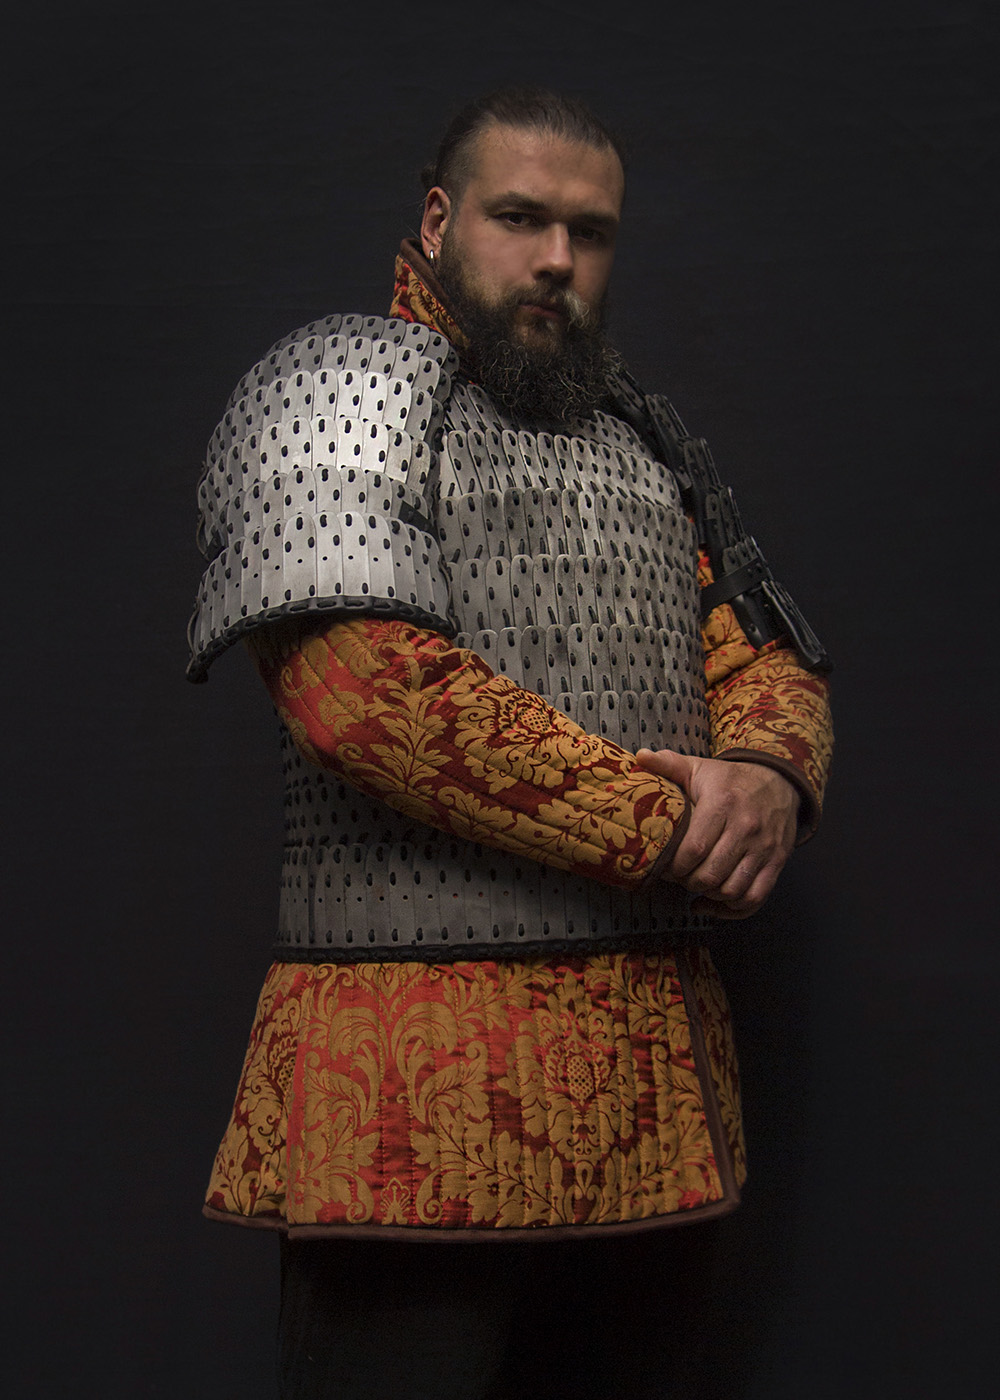 Medieval Lamellar Armor Scale Body Armor W Tassets Viking Armour SCA Armor